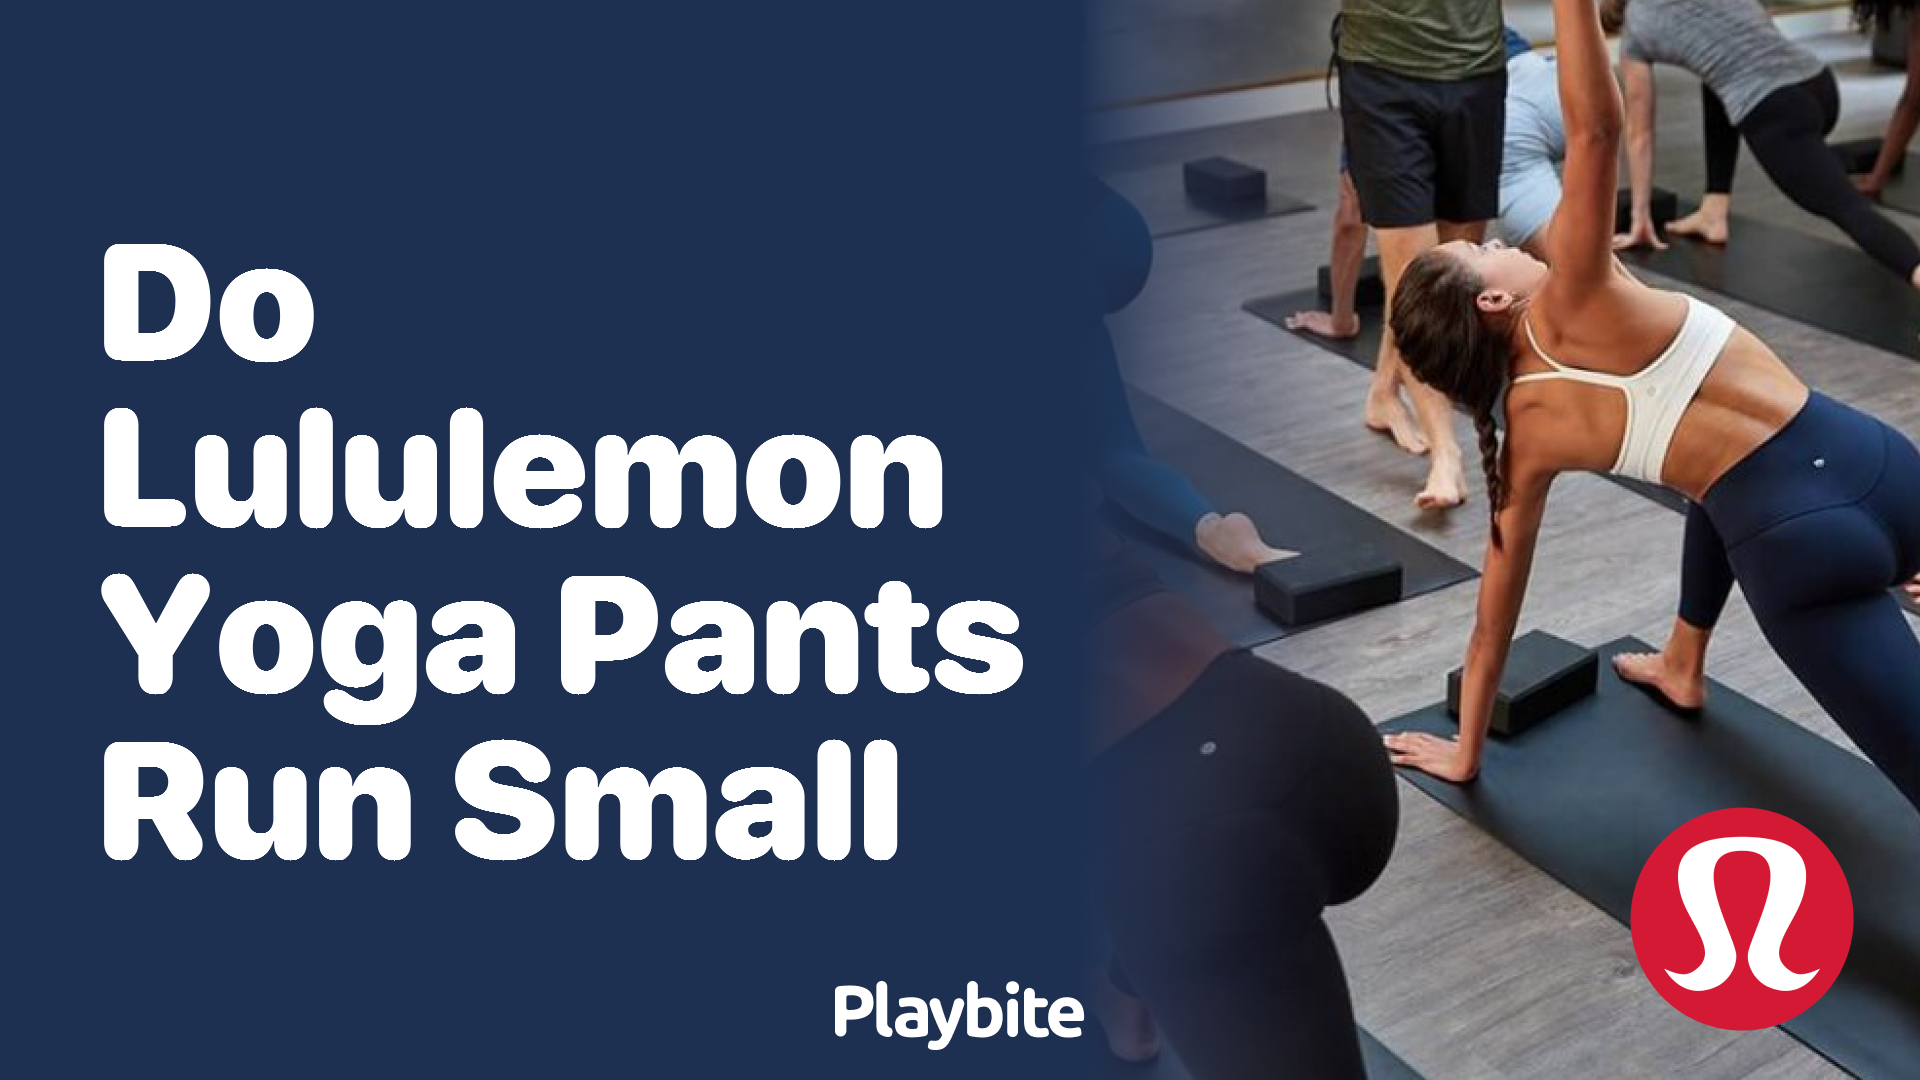 Do Lululemon Yoga Pants Run Small? - Playbite